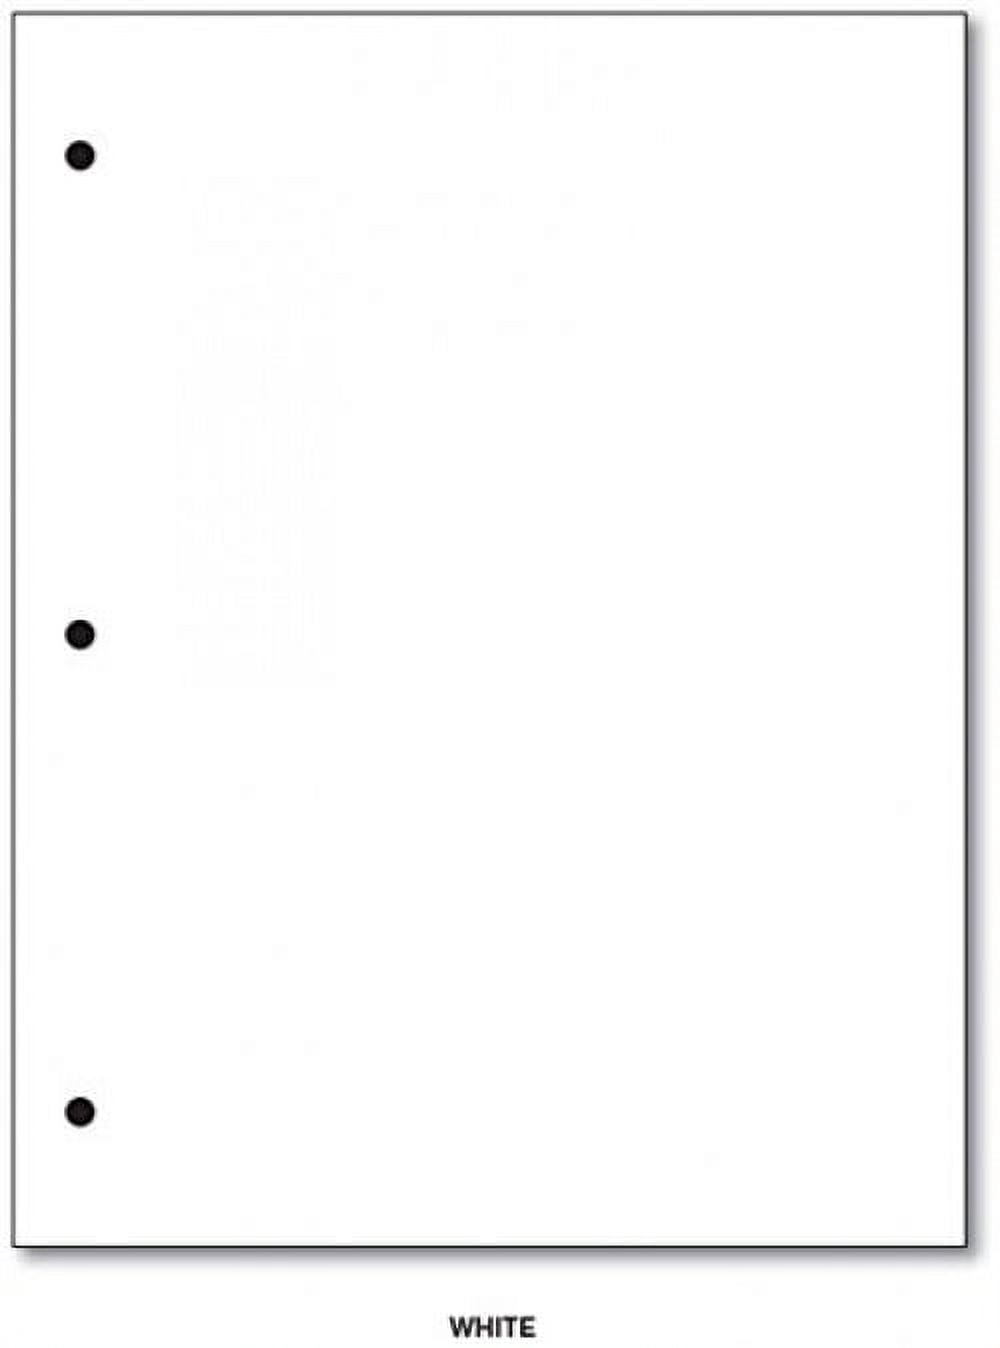 8-1/2 x 11 Laser Cut Sheet, 20# White Stock, 7 Hole Punch Left, 5/16  Diameter (Carton of 2500)